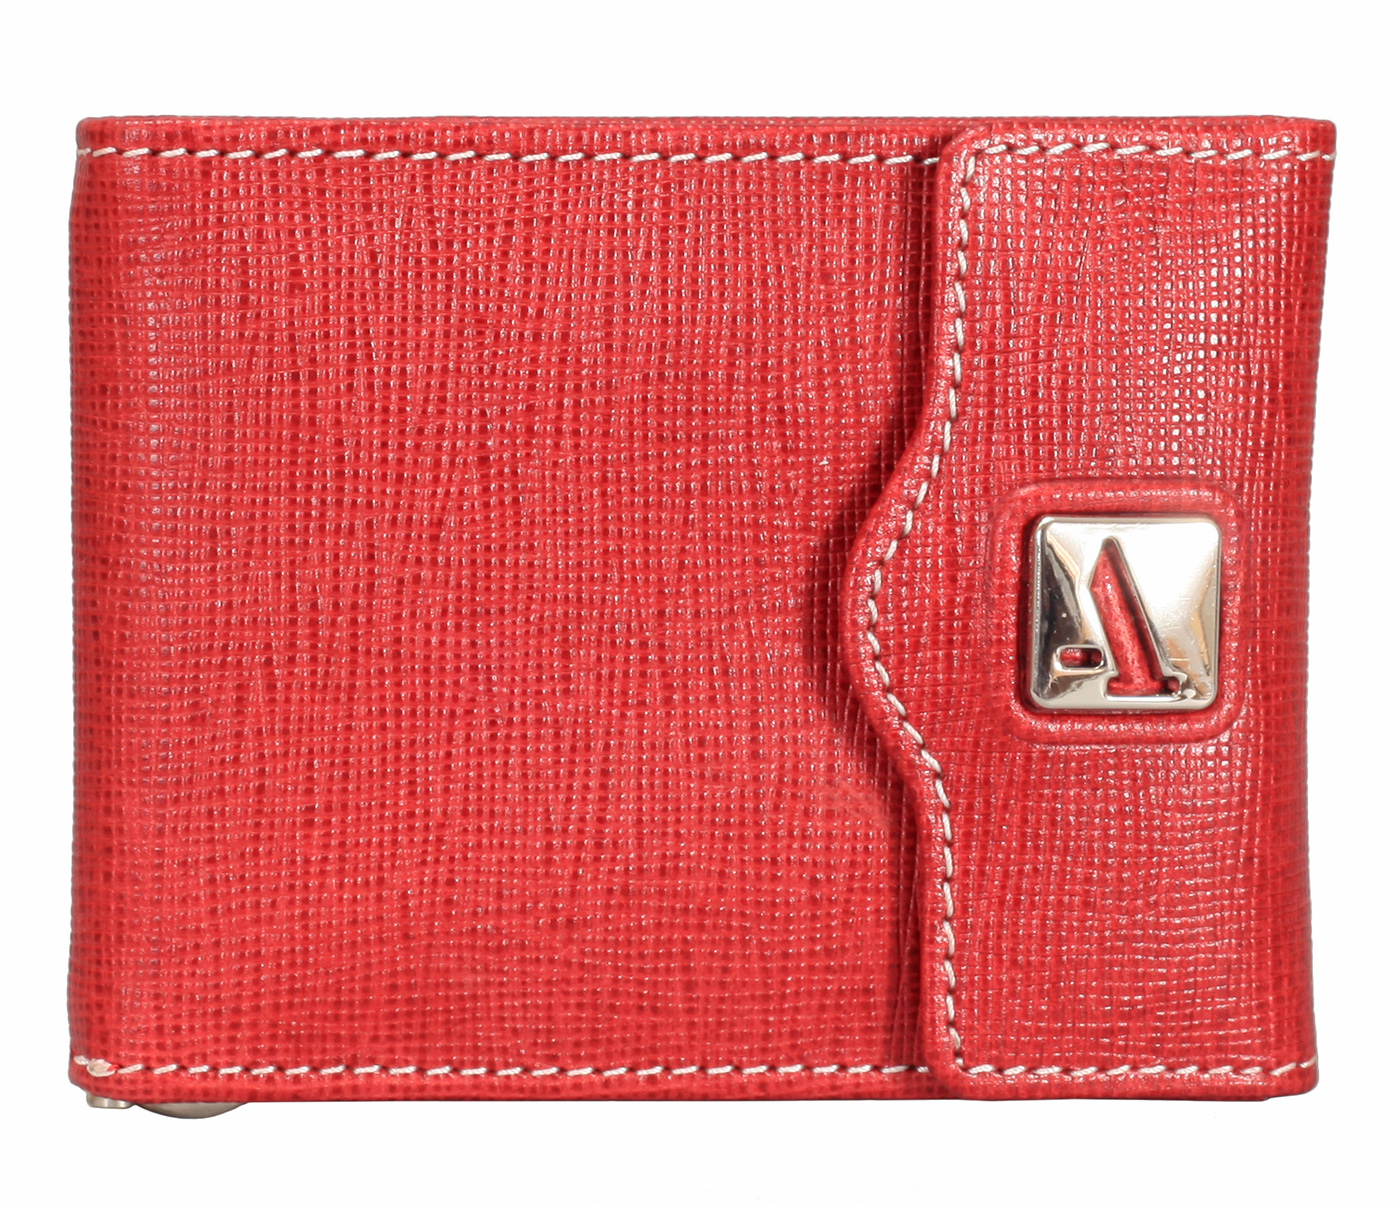 W328-Noah-Men's bifold money clip wallet in Genuine Leather - Red